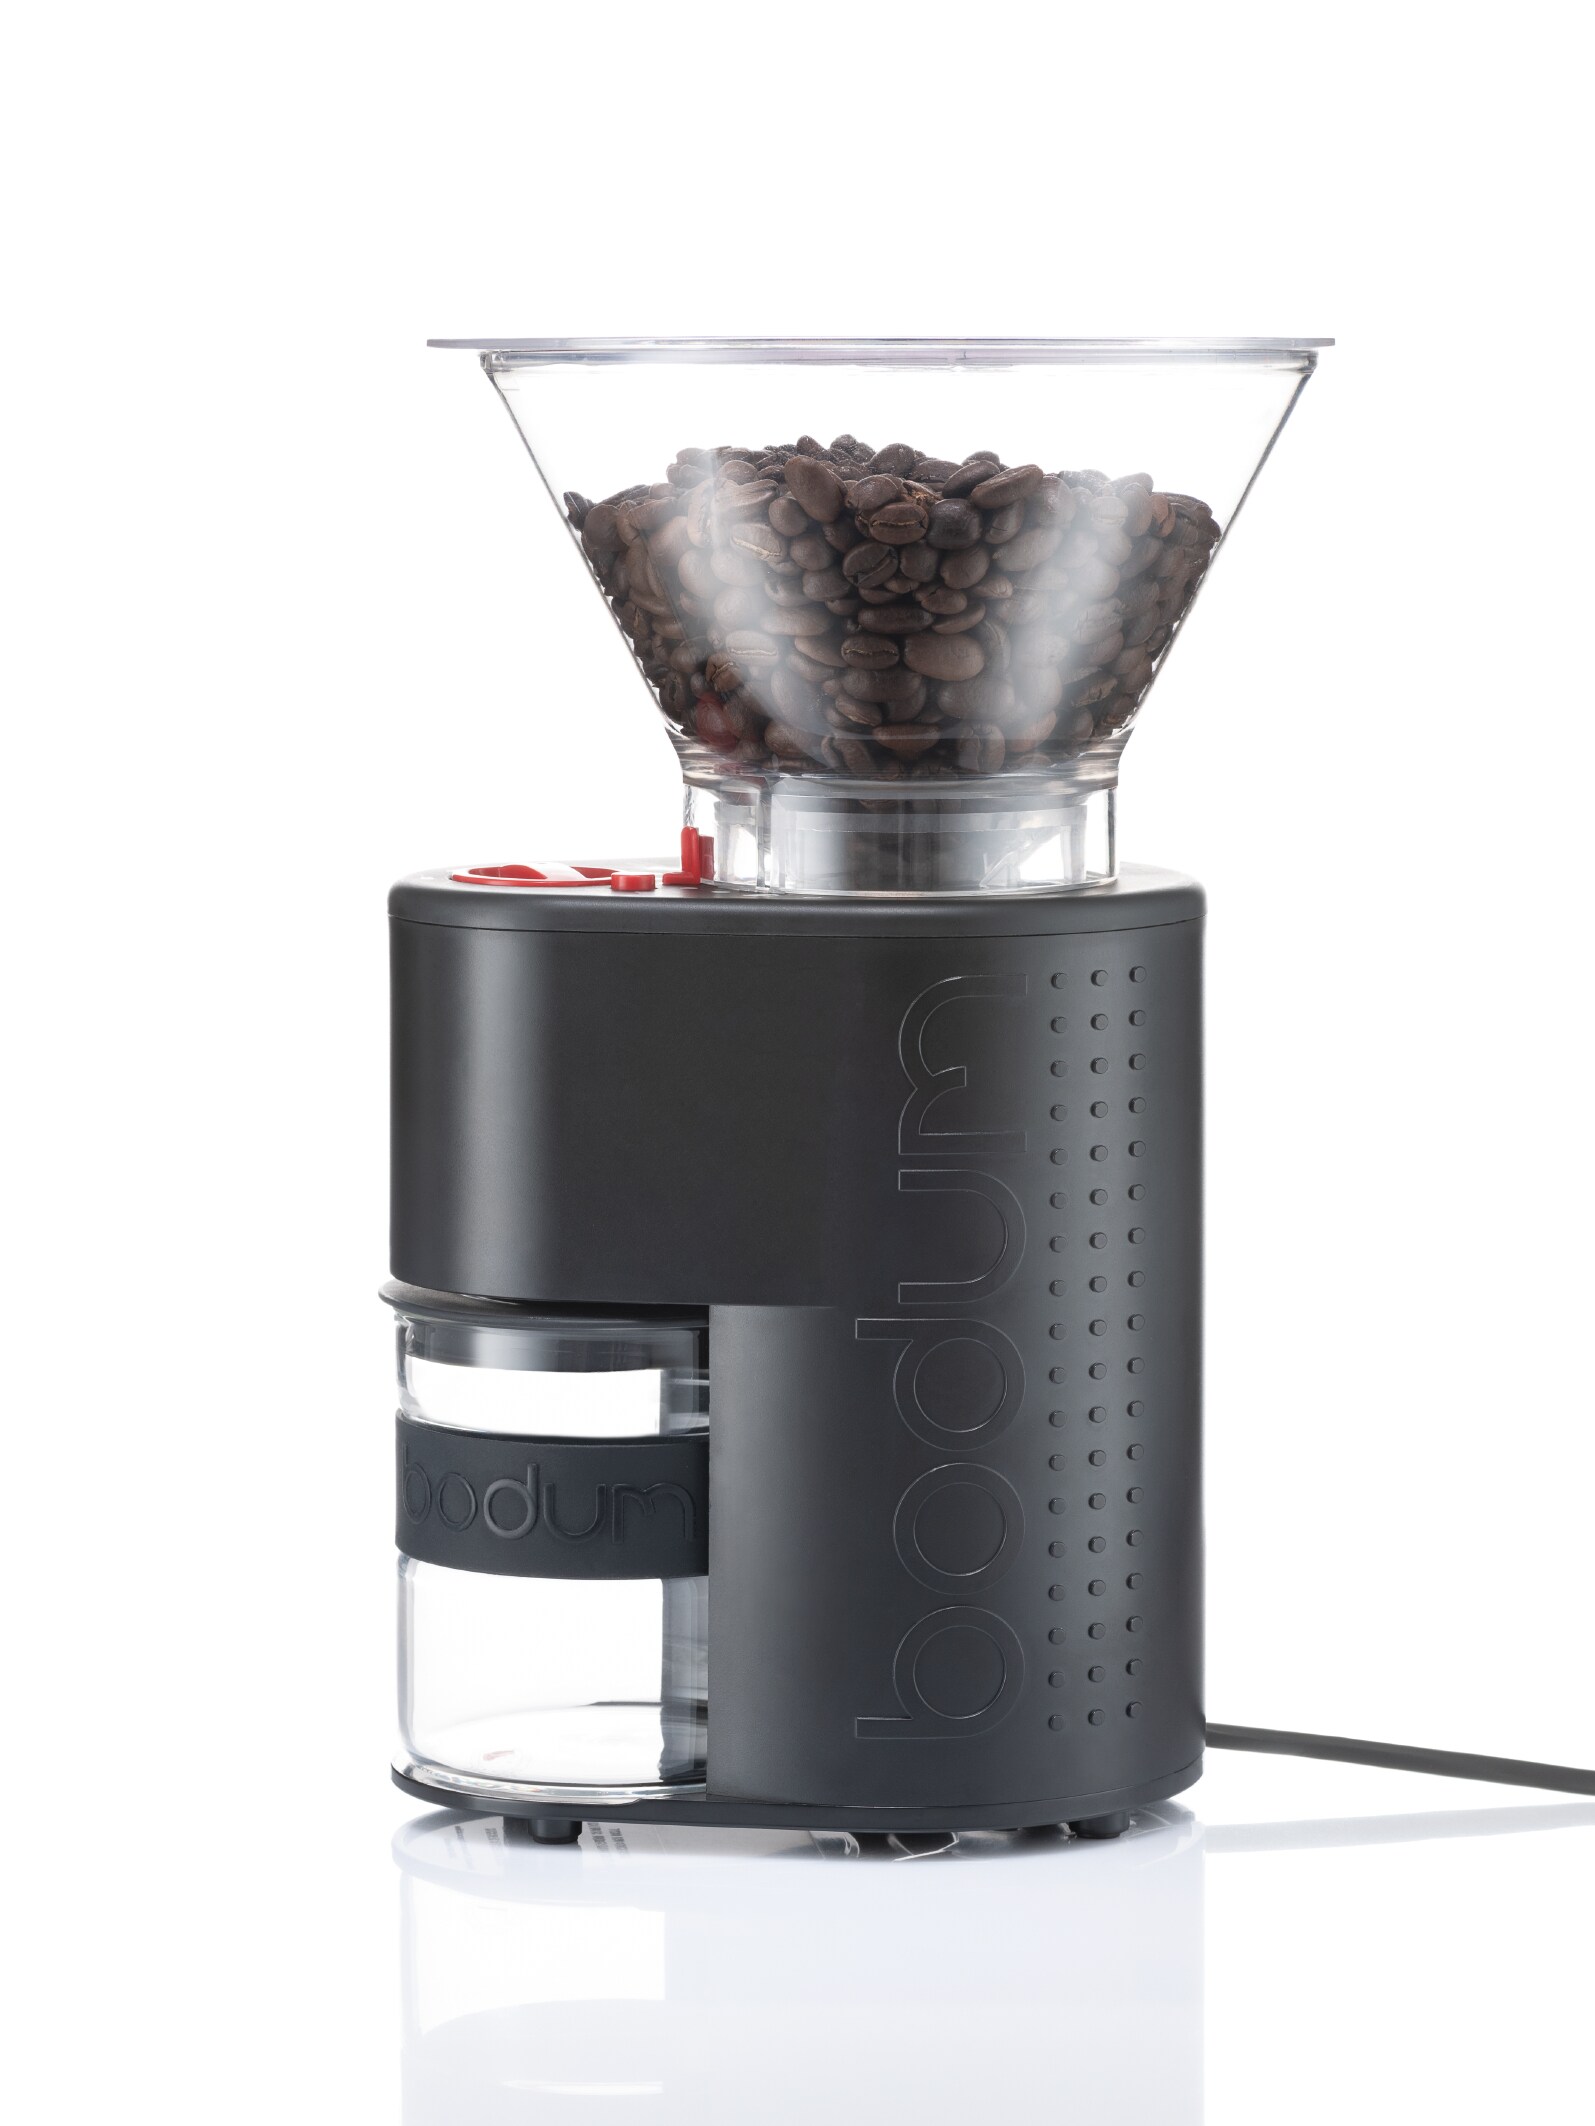 Bodum C-Mill Blade Electric Coffee Grinder